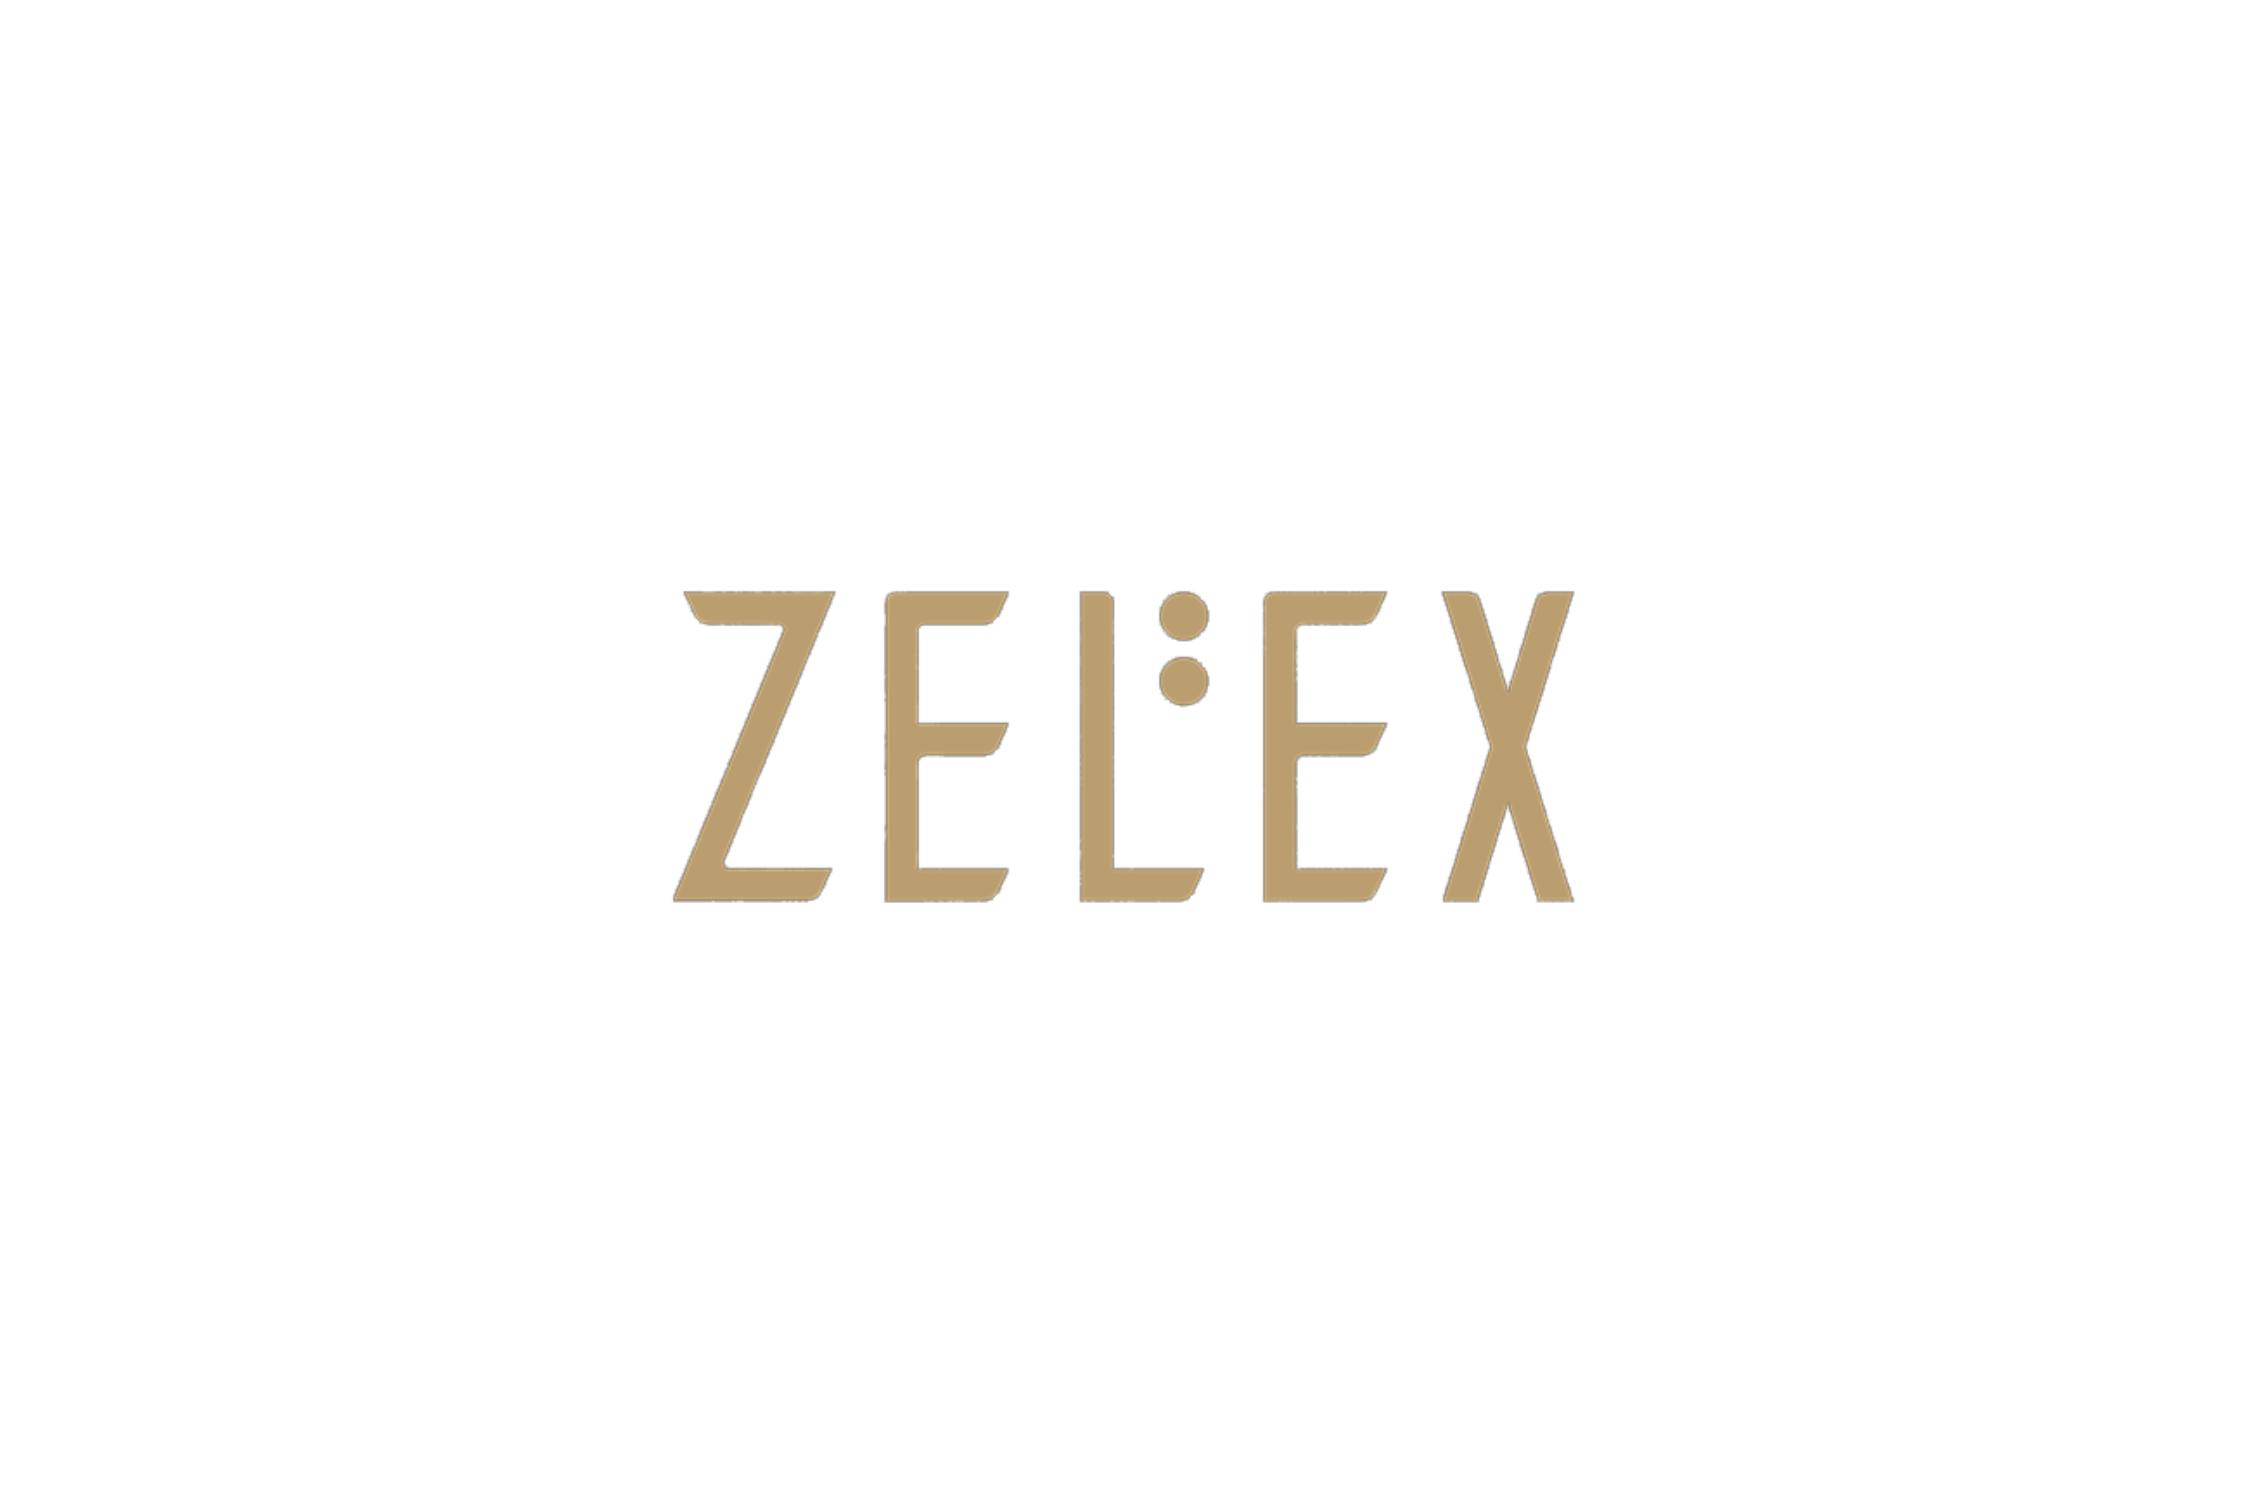 Zelex is a Maker of Hyper-Realistic Sex Dolls.